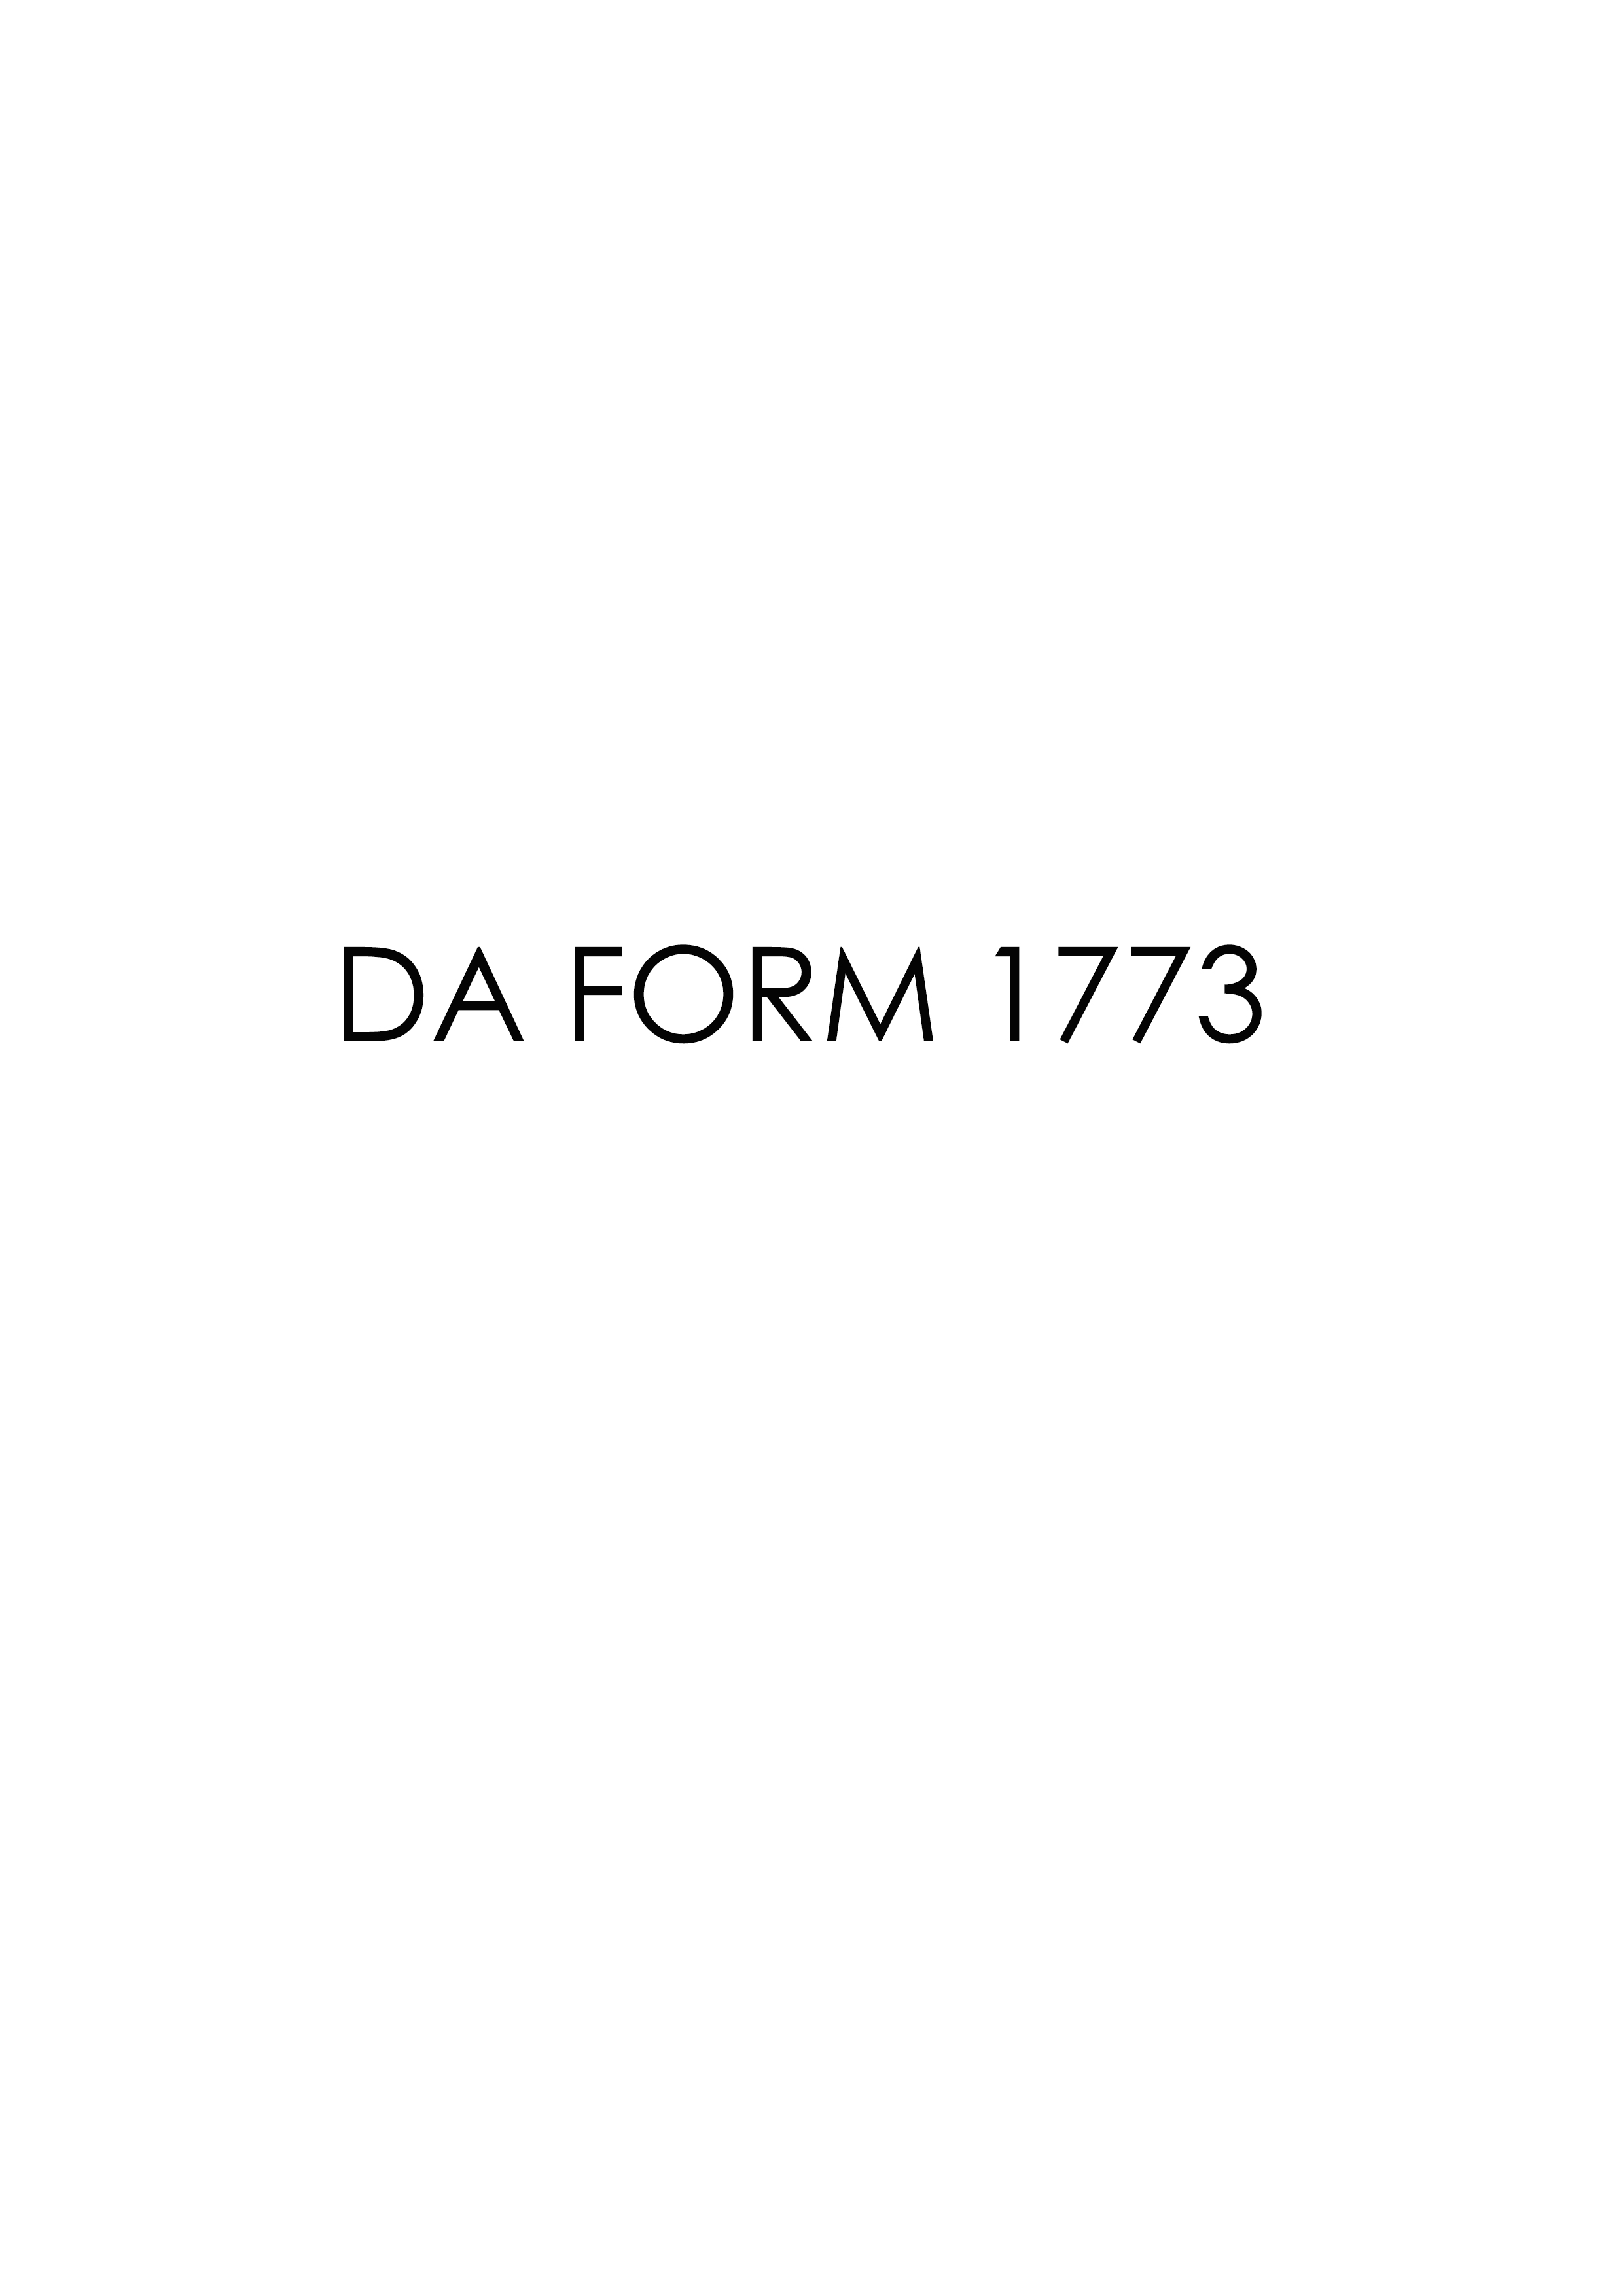 Download da 1773 Form